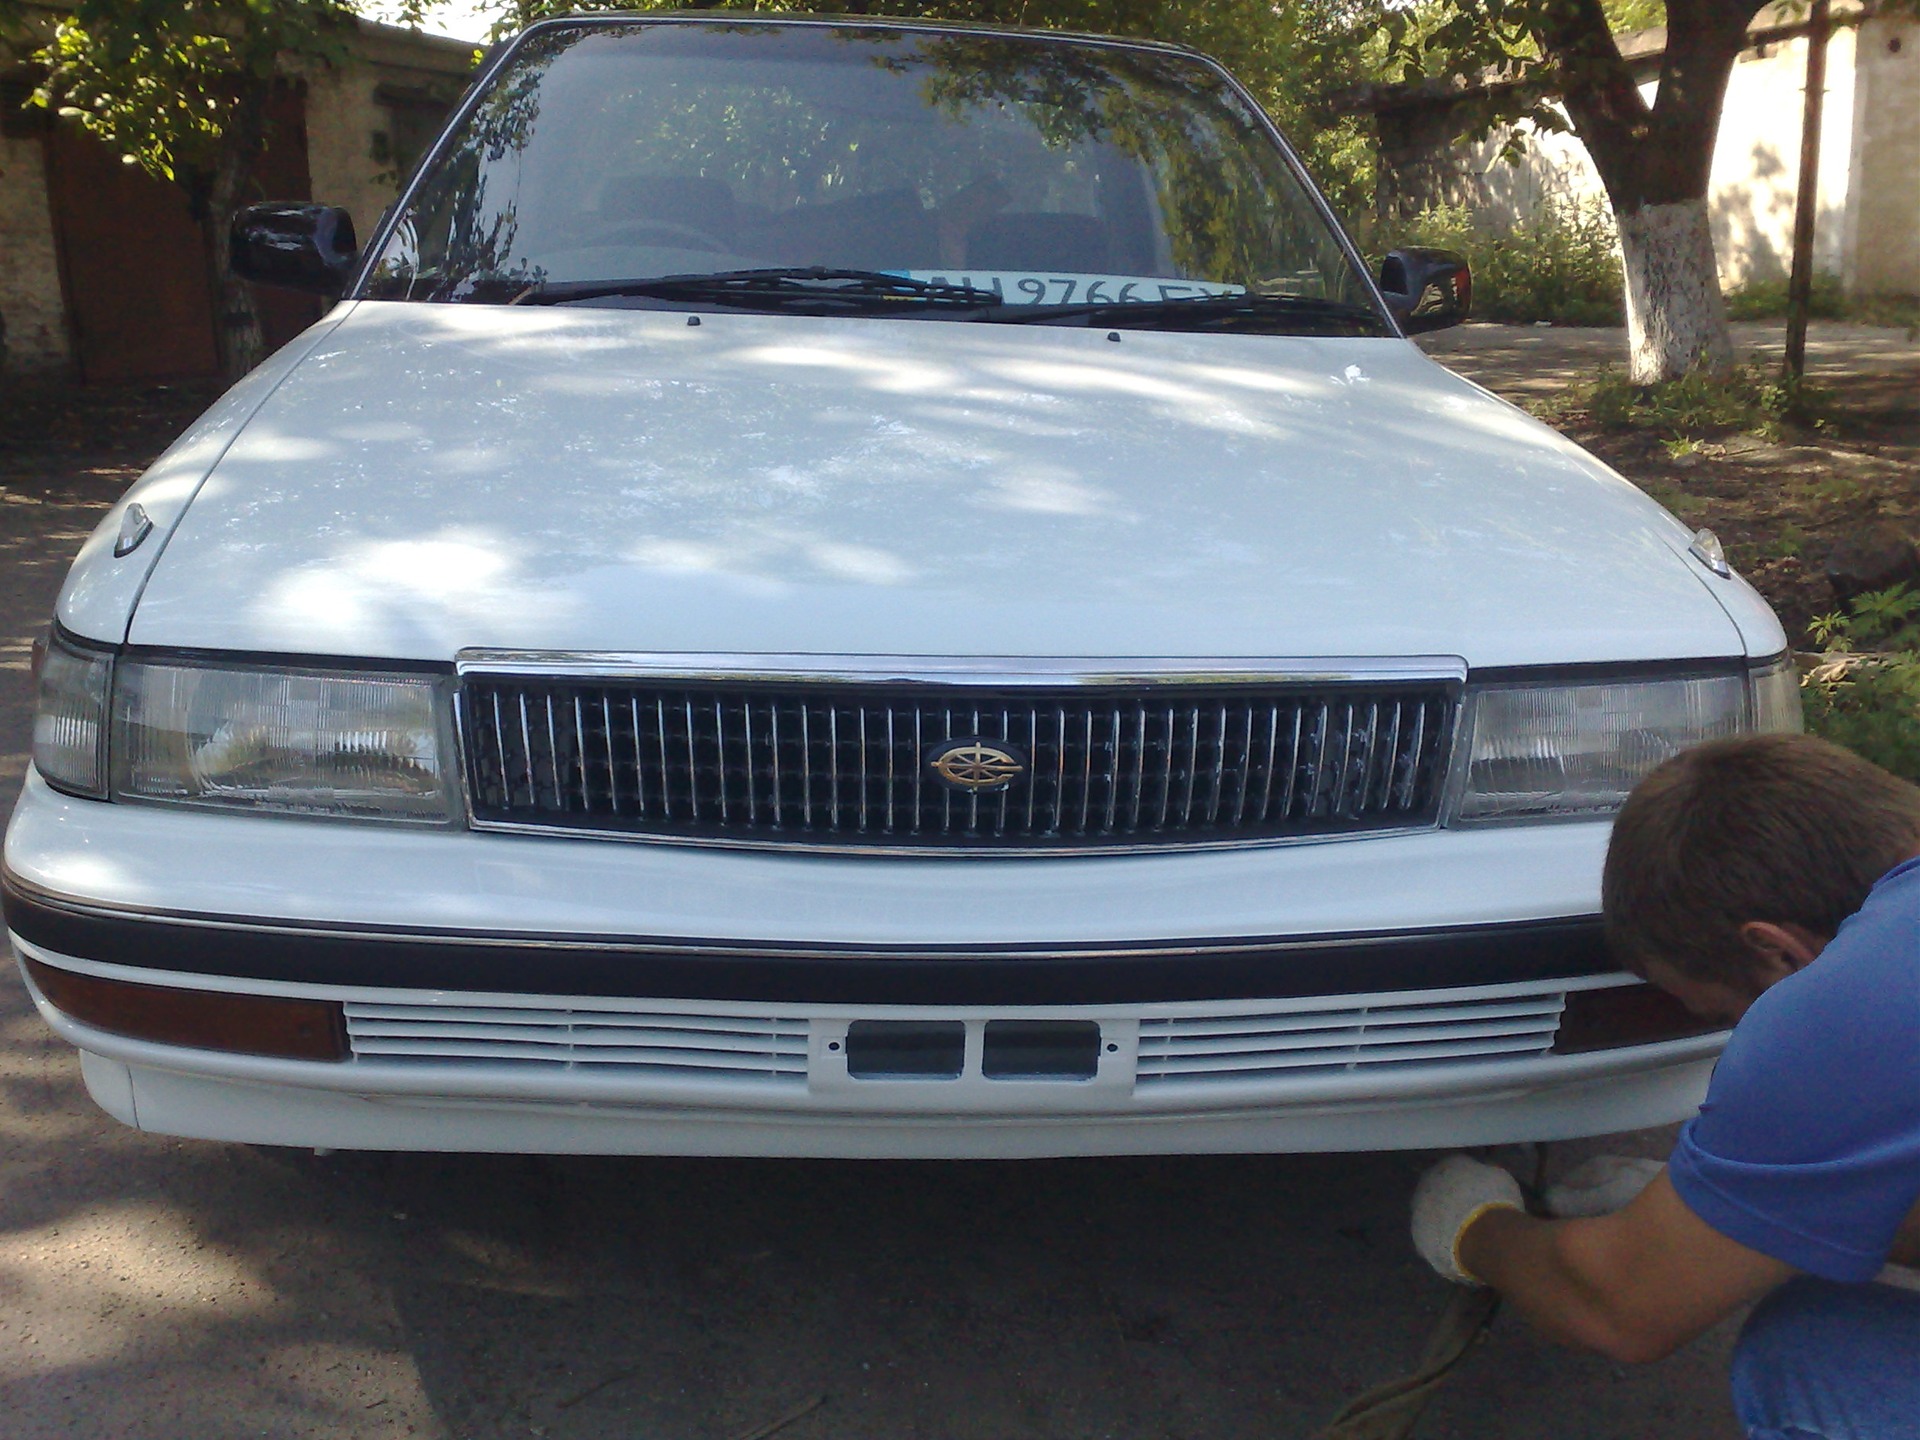  31 2010 Toyota Corona 18 1990 